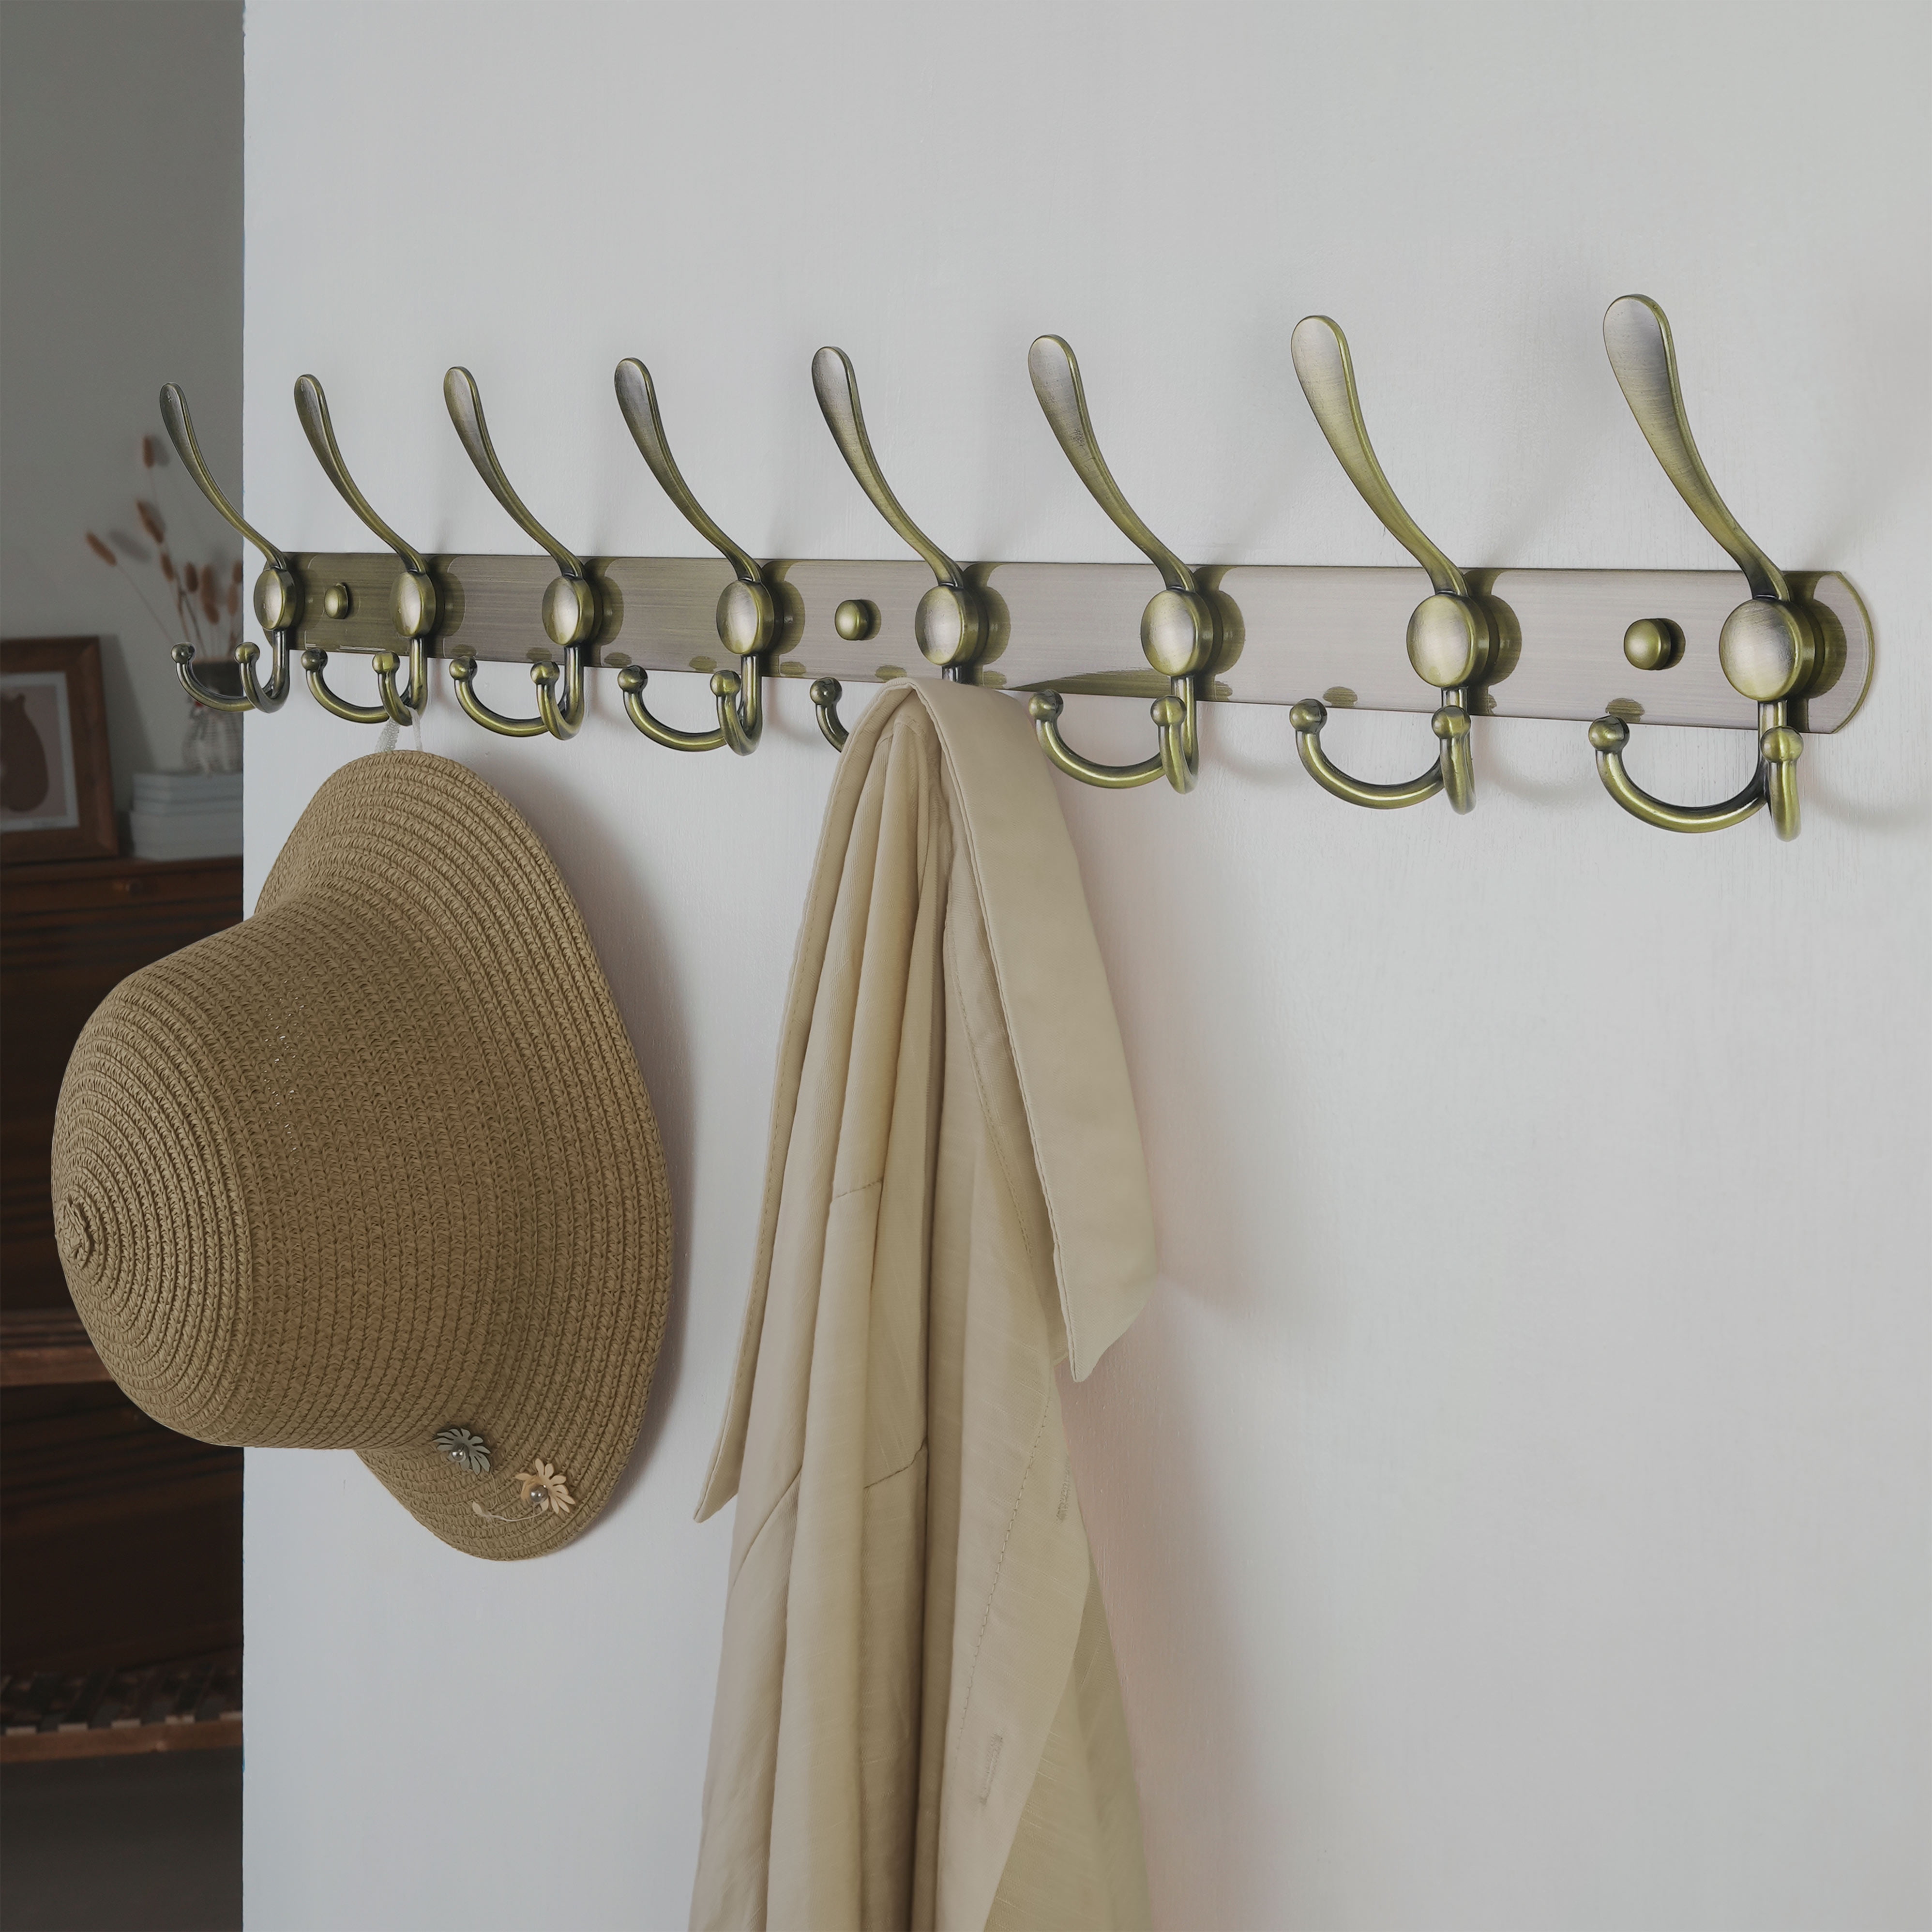 Dseap Coat Rack Wall Mounted-5 Tri Hooks,Stainless Steel Heavy Duty Coat  Hook Rail for Hats Clothing,Matte Black 2 Pack 